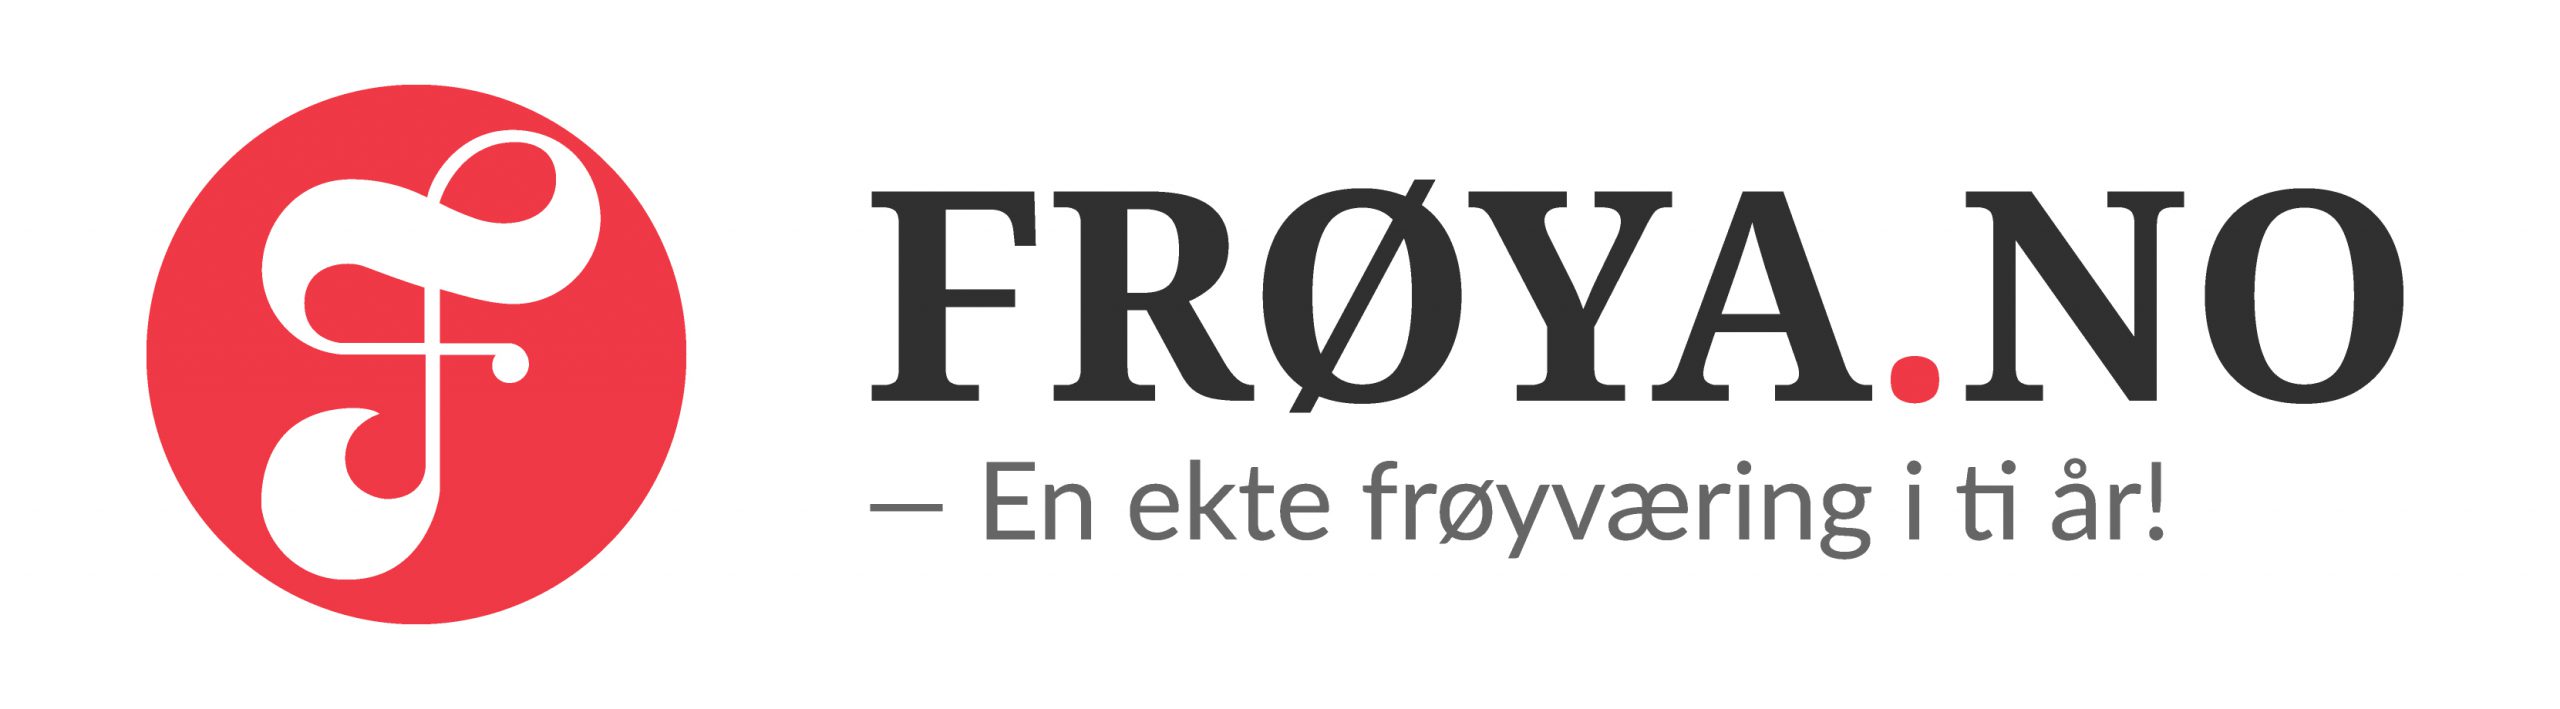 Frøya.no